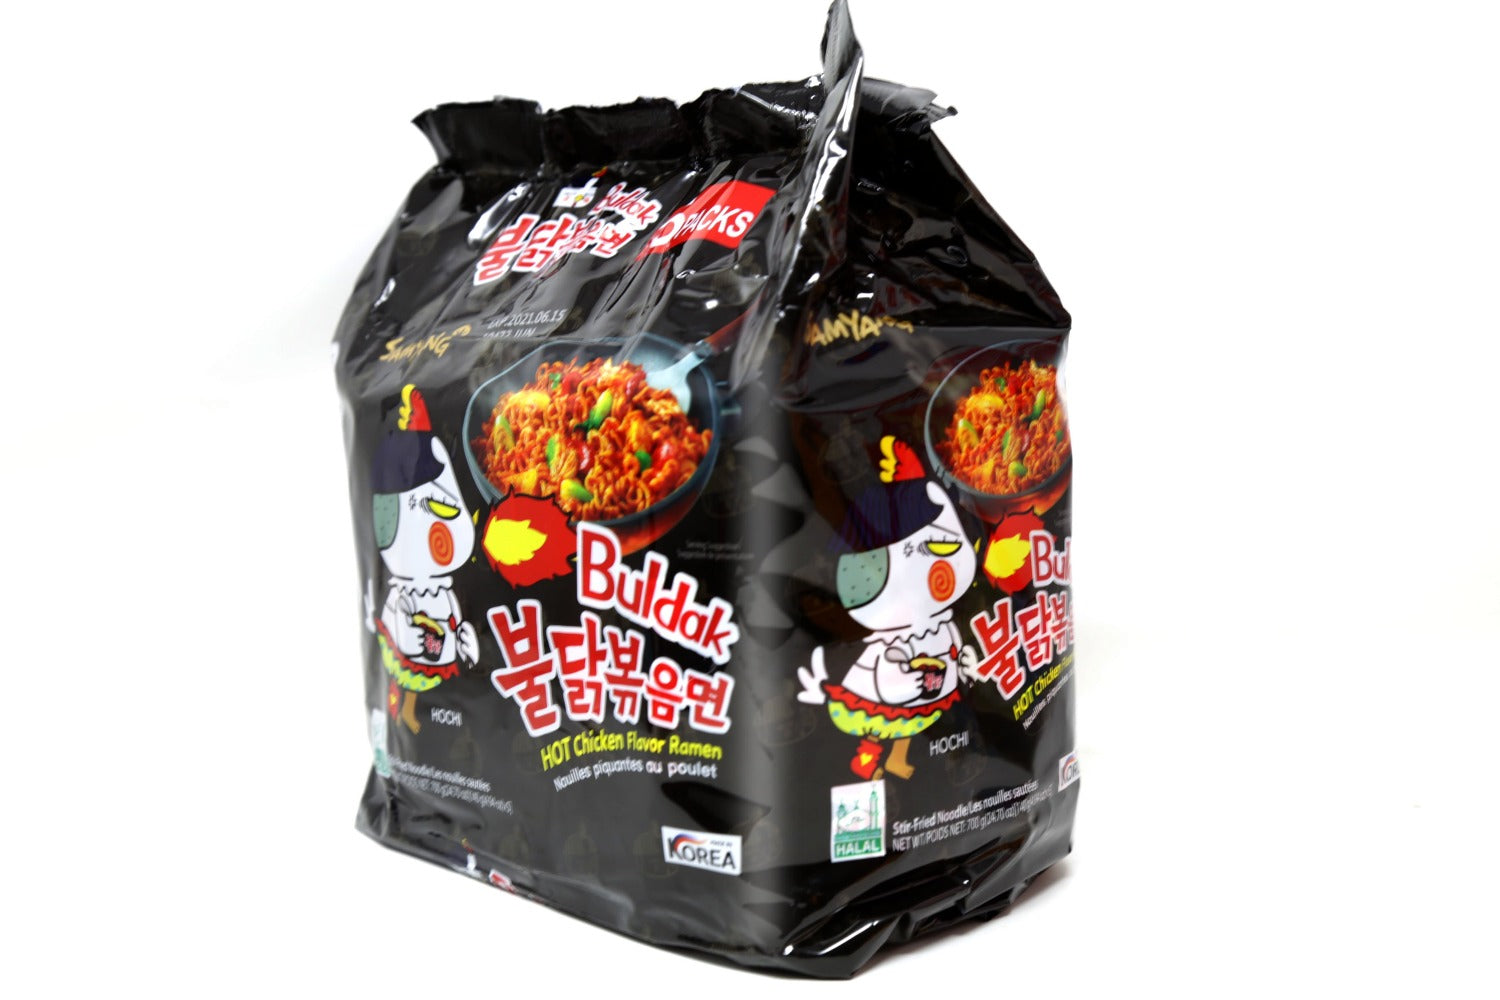 Buldak Hot Chicken Flavor Ramen Multipack (5 Packs per Order